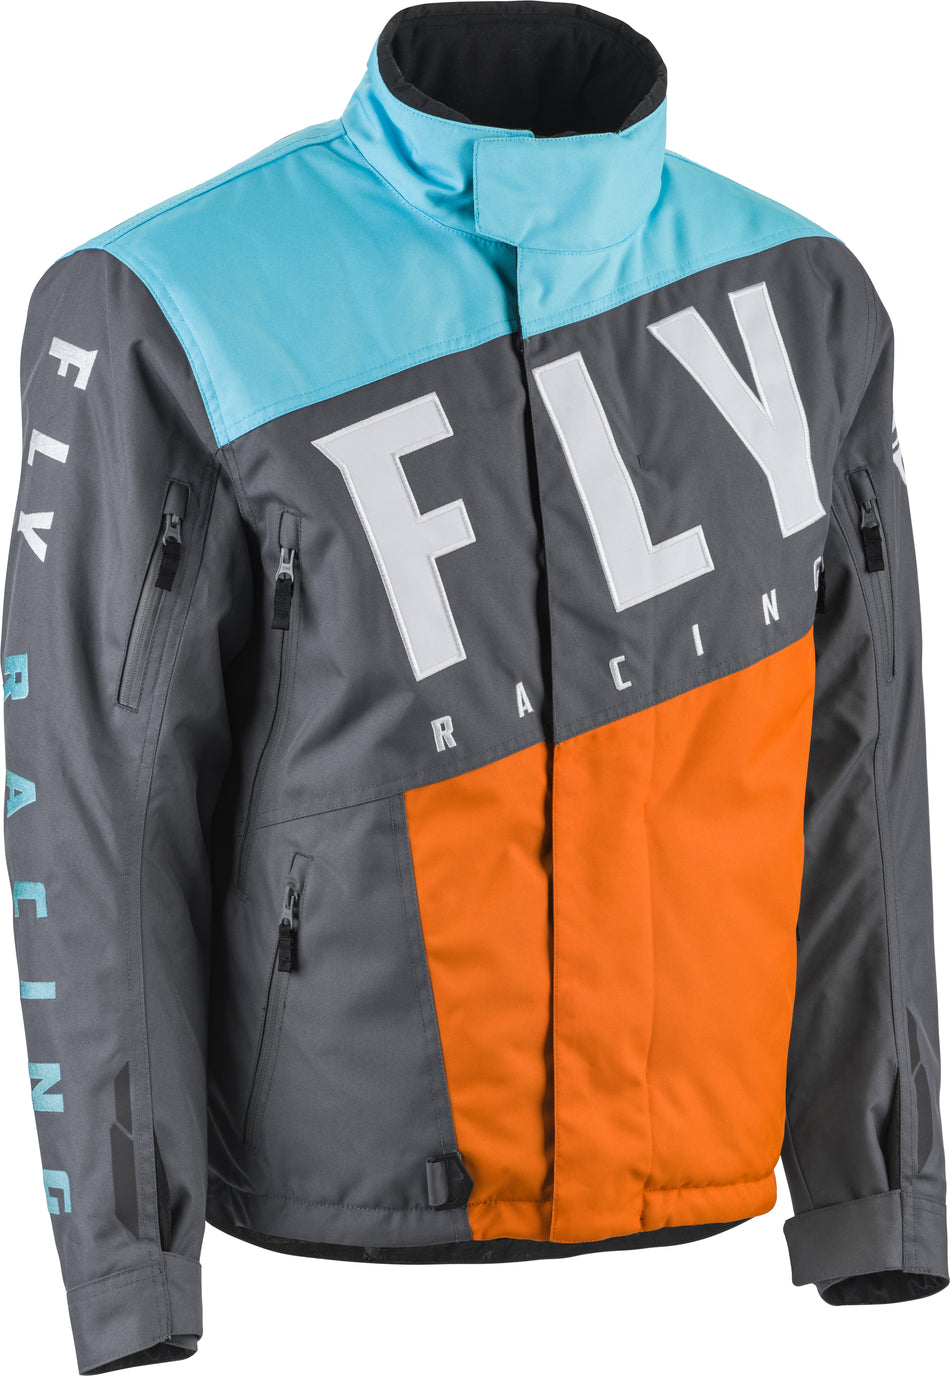 FLY RACING Snx Pro Jacket Orange/Light Blue/Black Sm 470-4114S